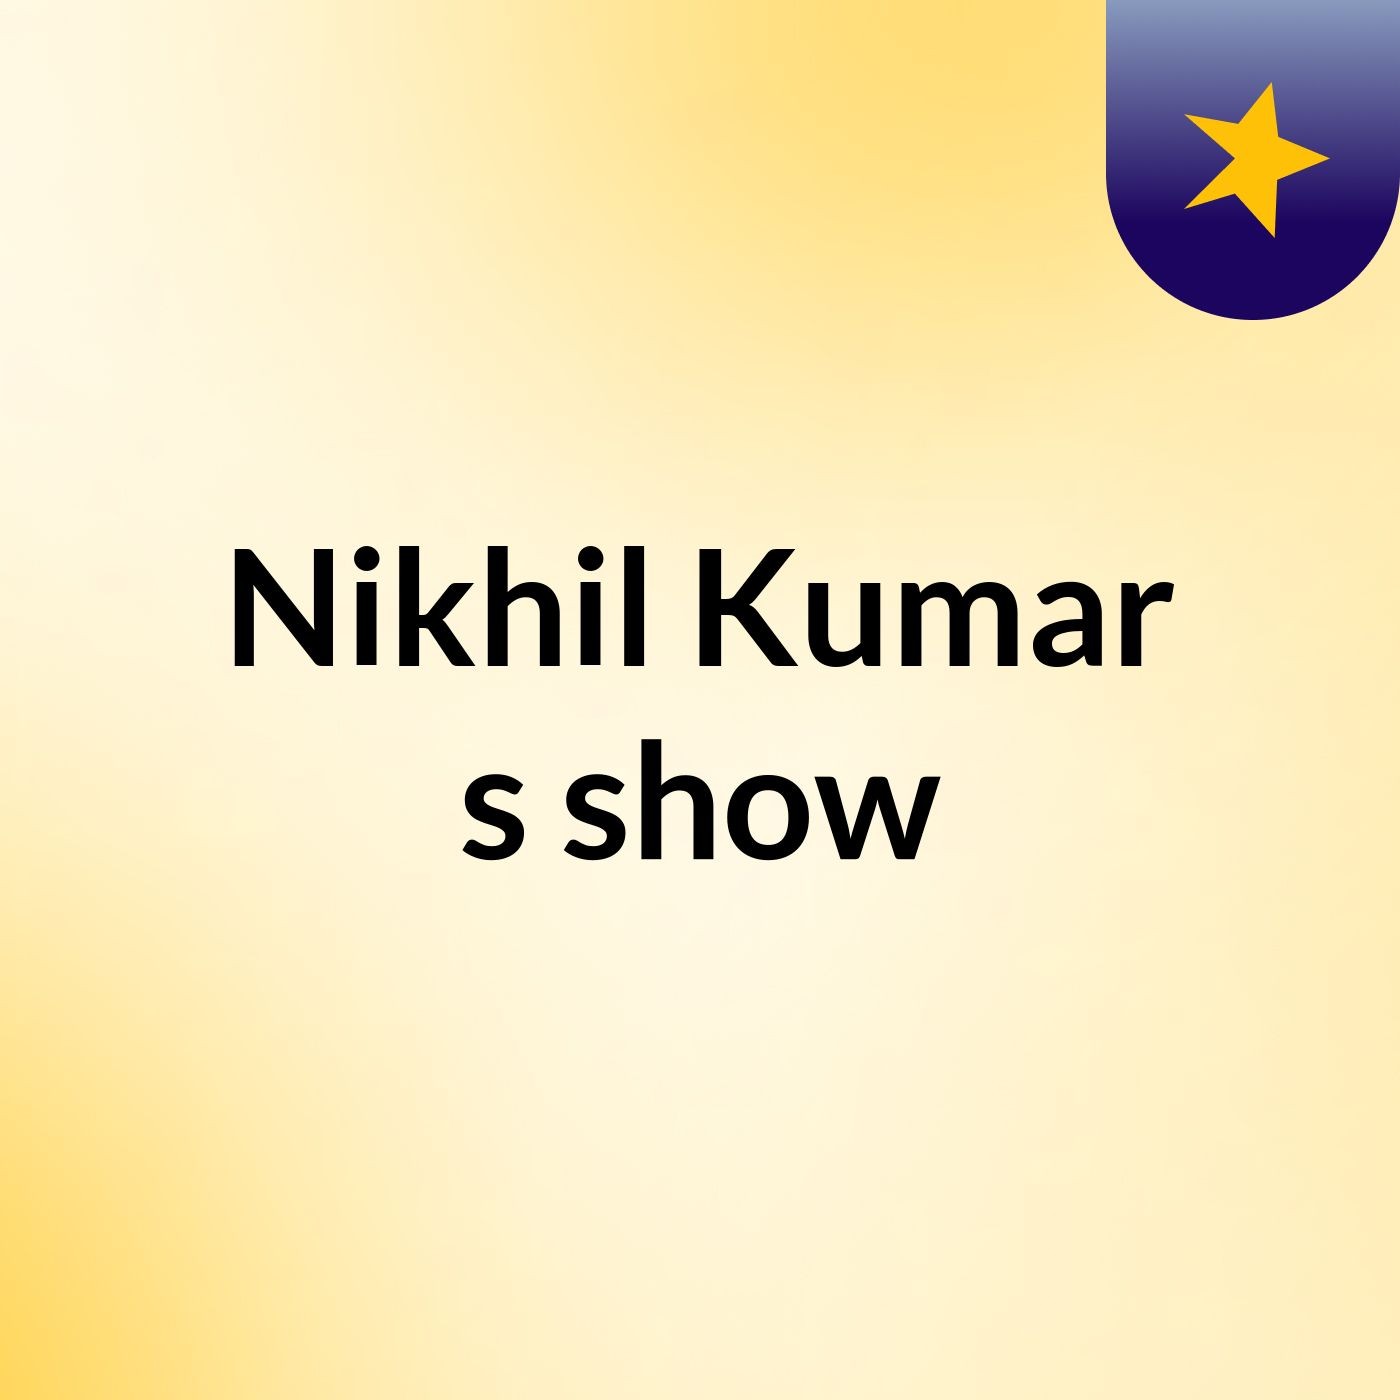 Nikhil Kumar's show